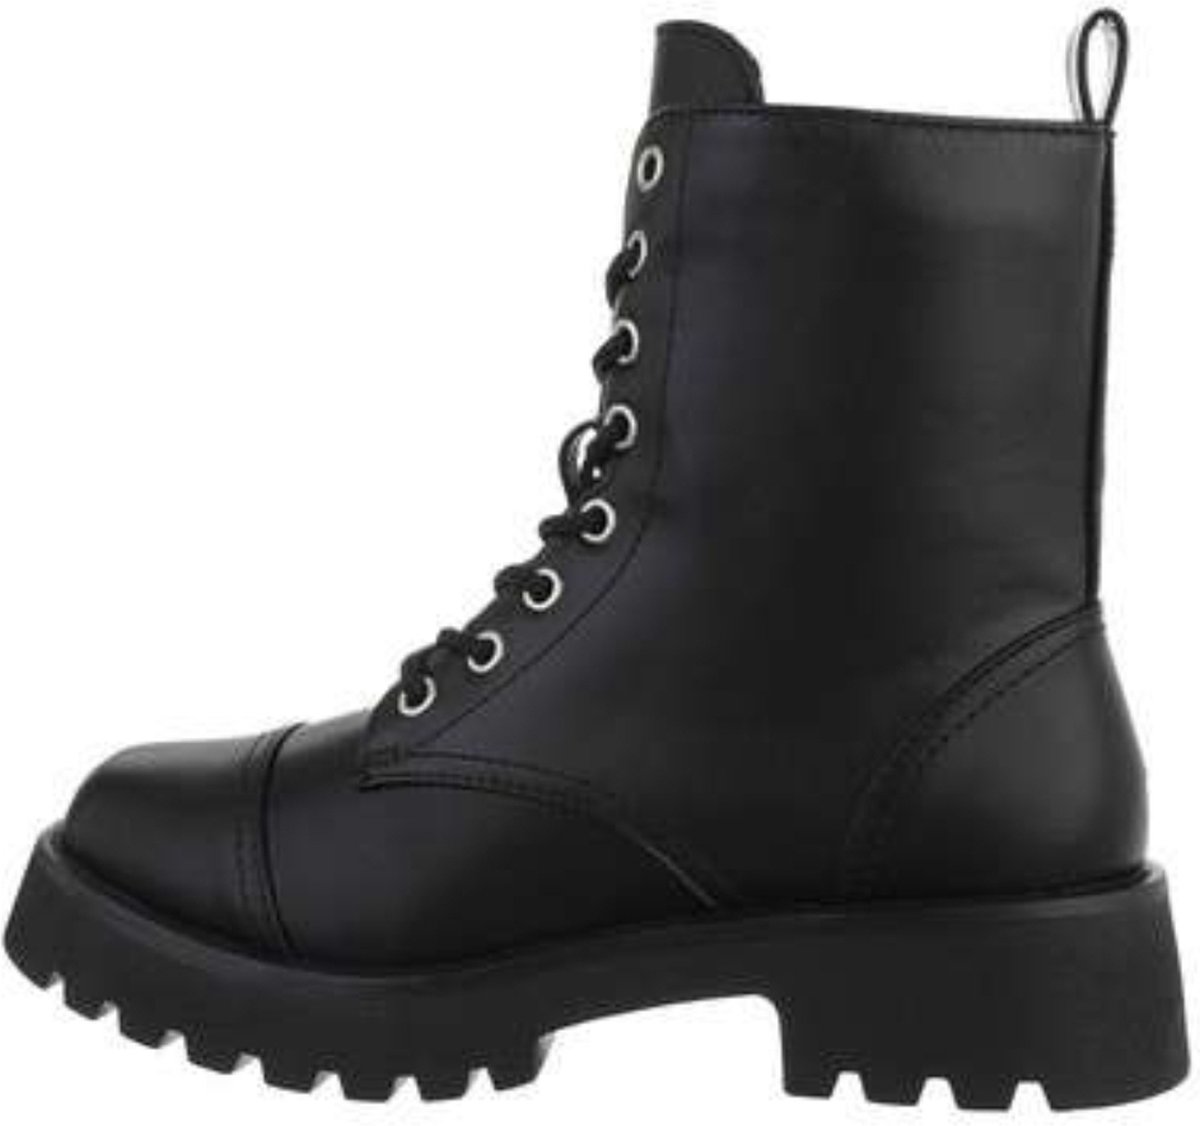 Boots Black Basic